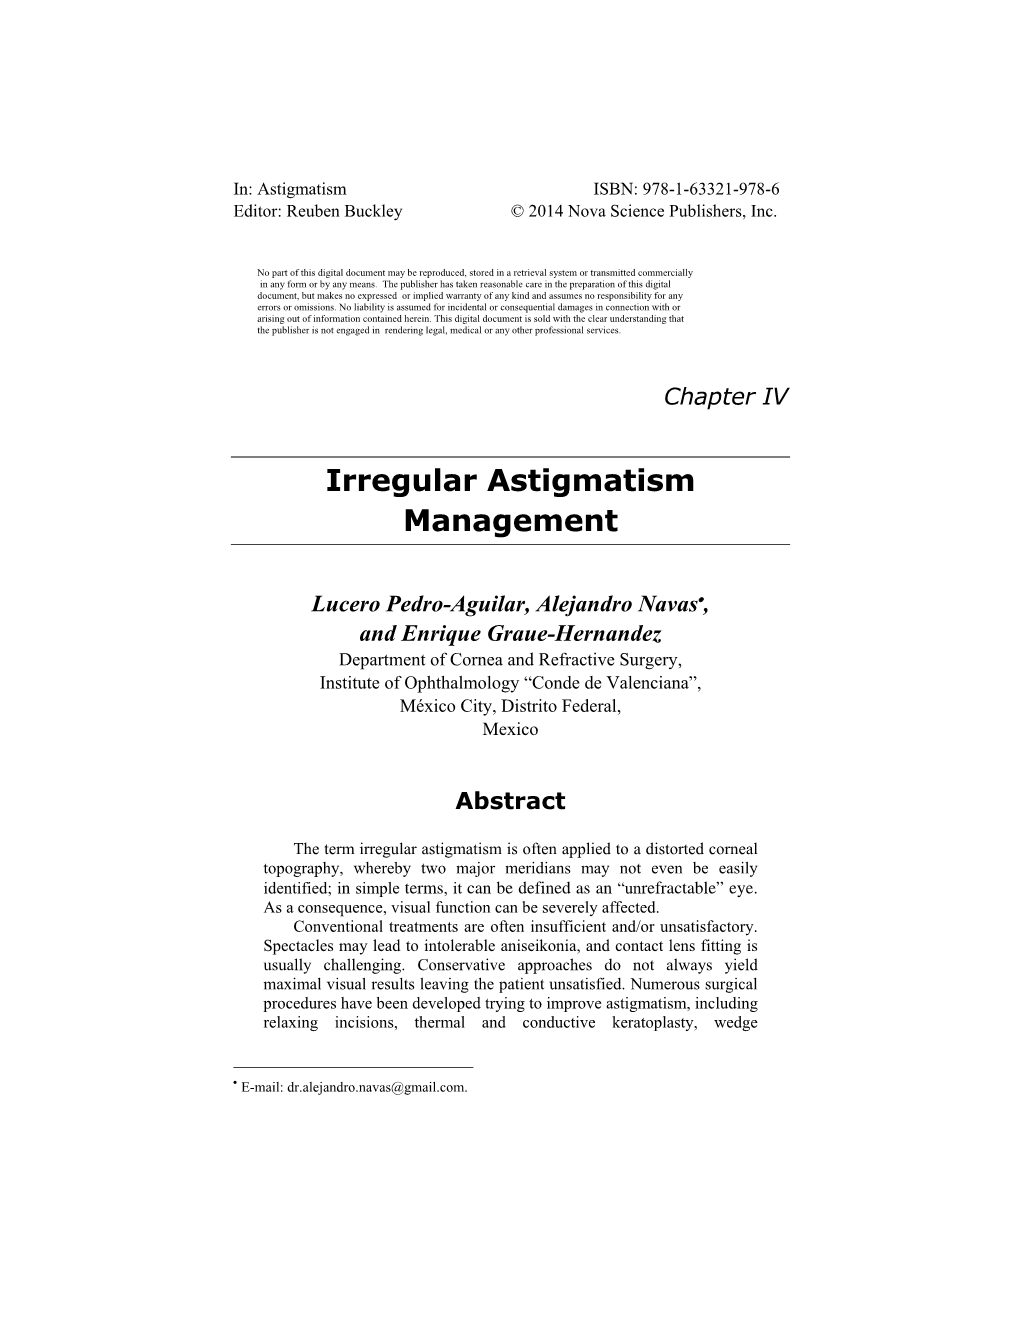 Irregular Astigmatism Management